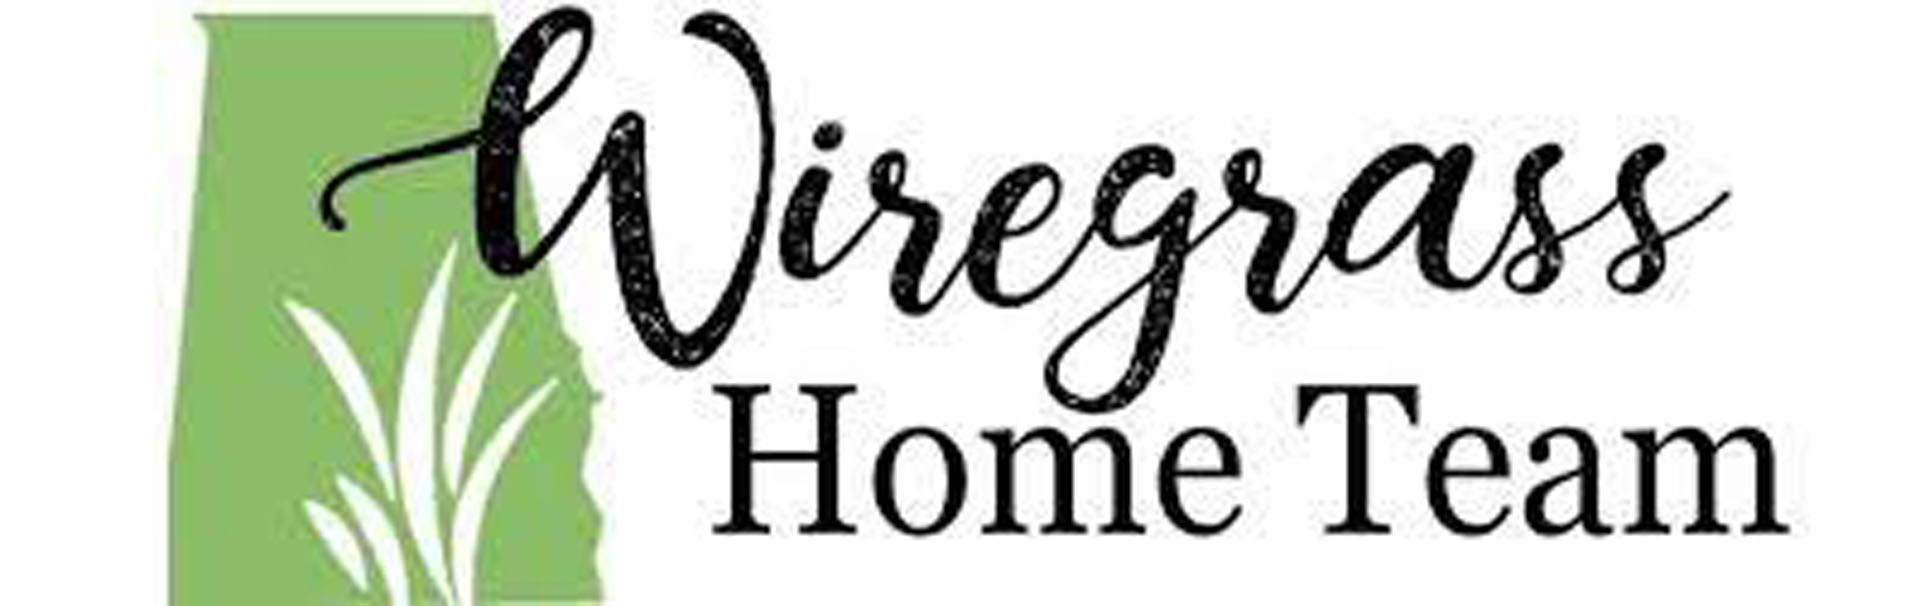 Corporate Member Spotlight – Wiregrass Home Team